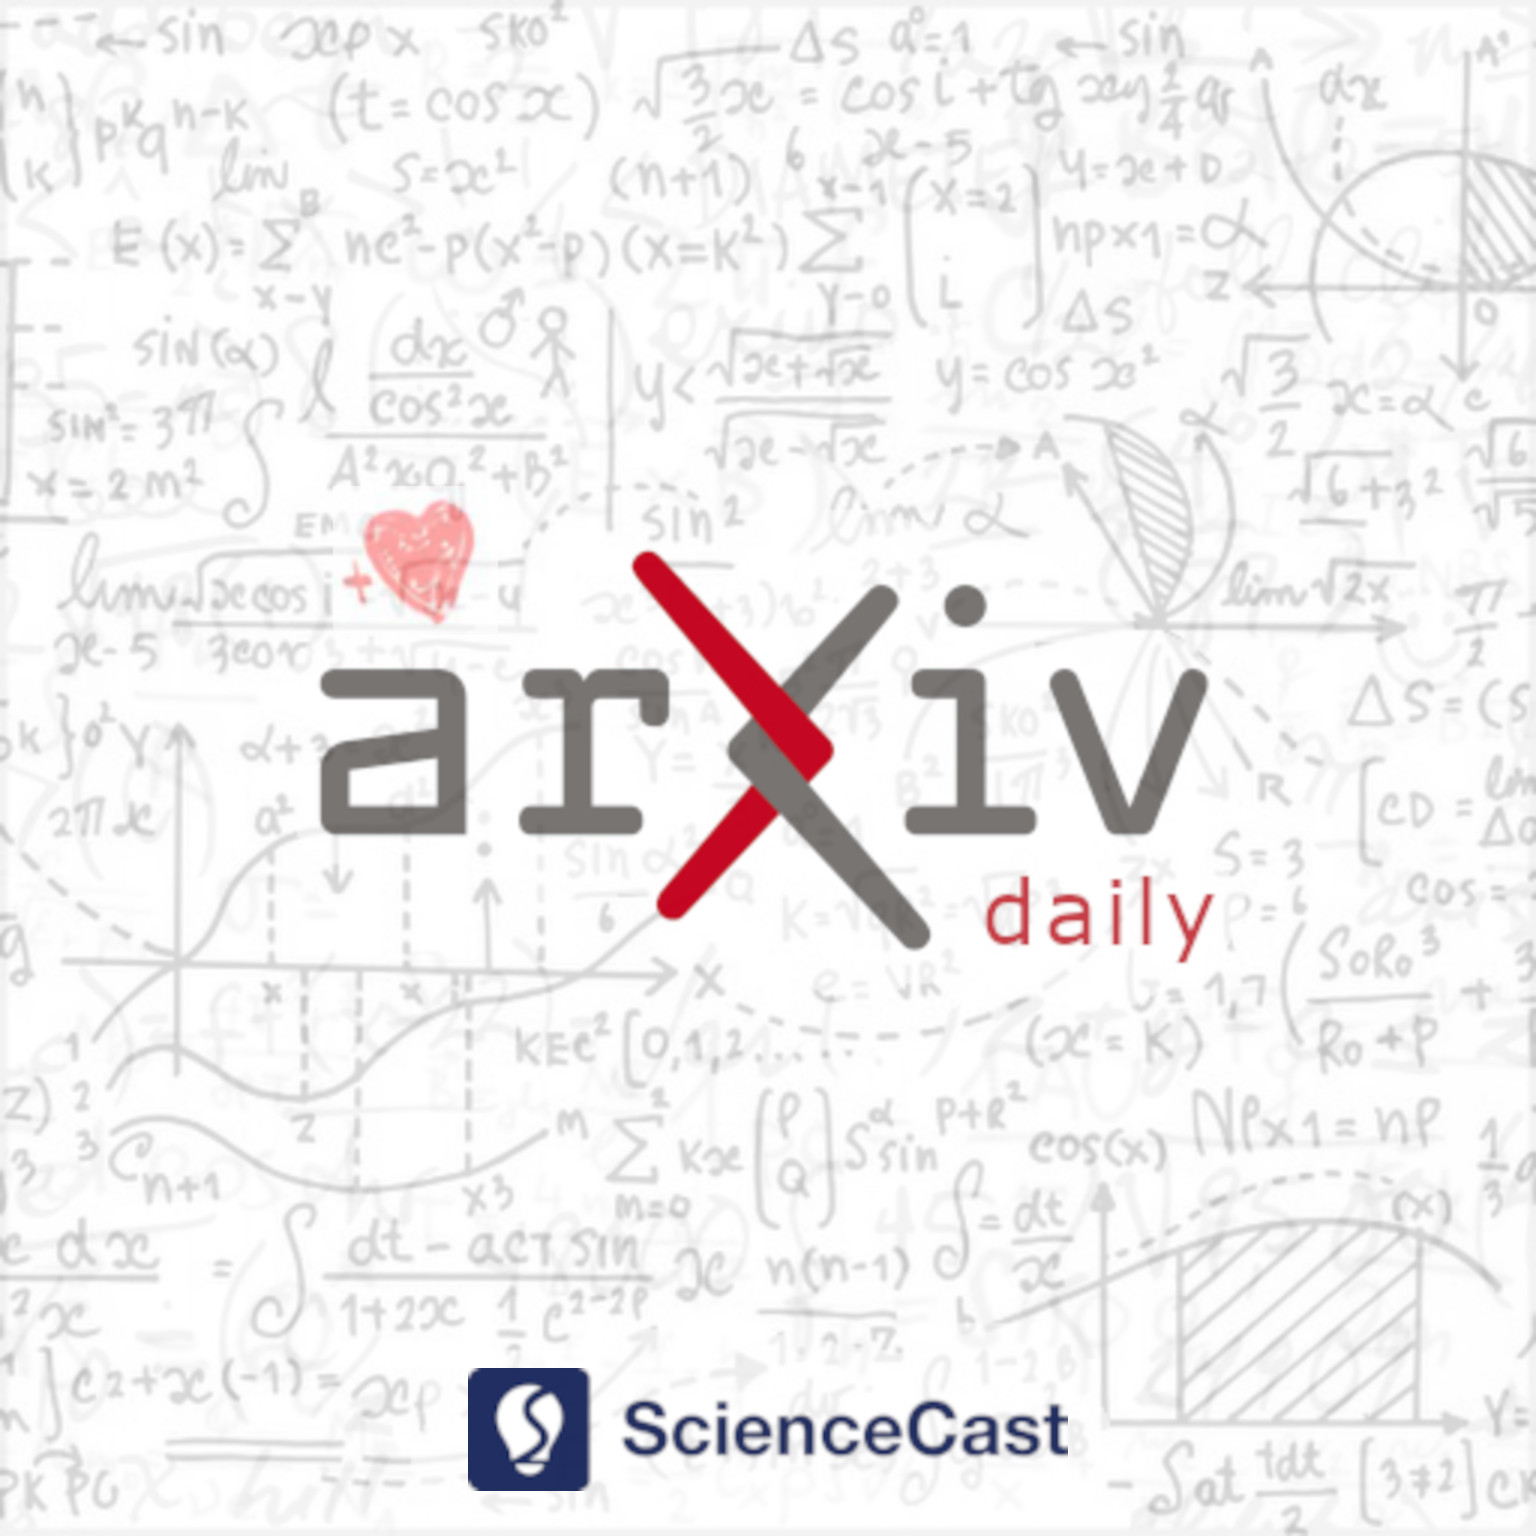 arXiv daily: High Energy Astrophysical Phenomena